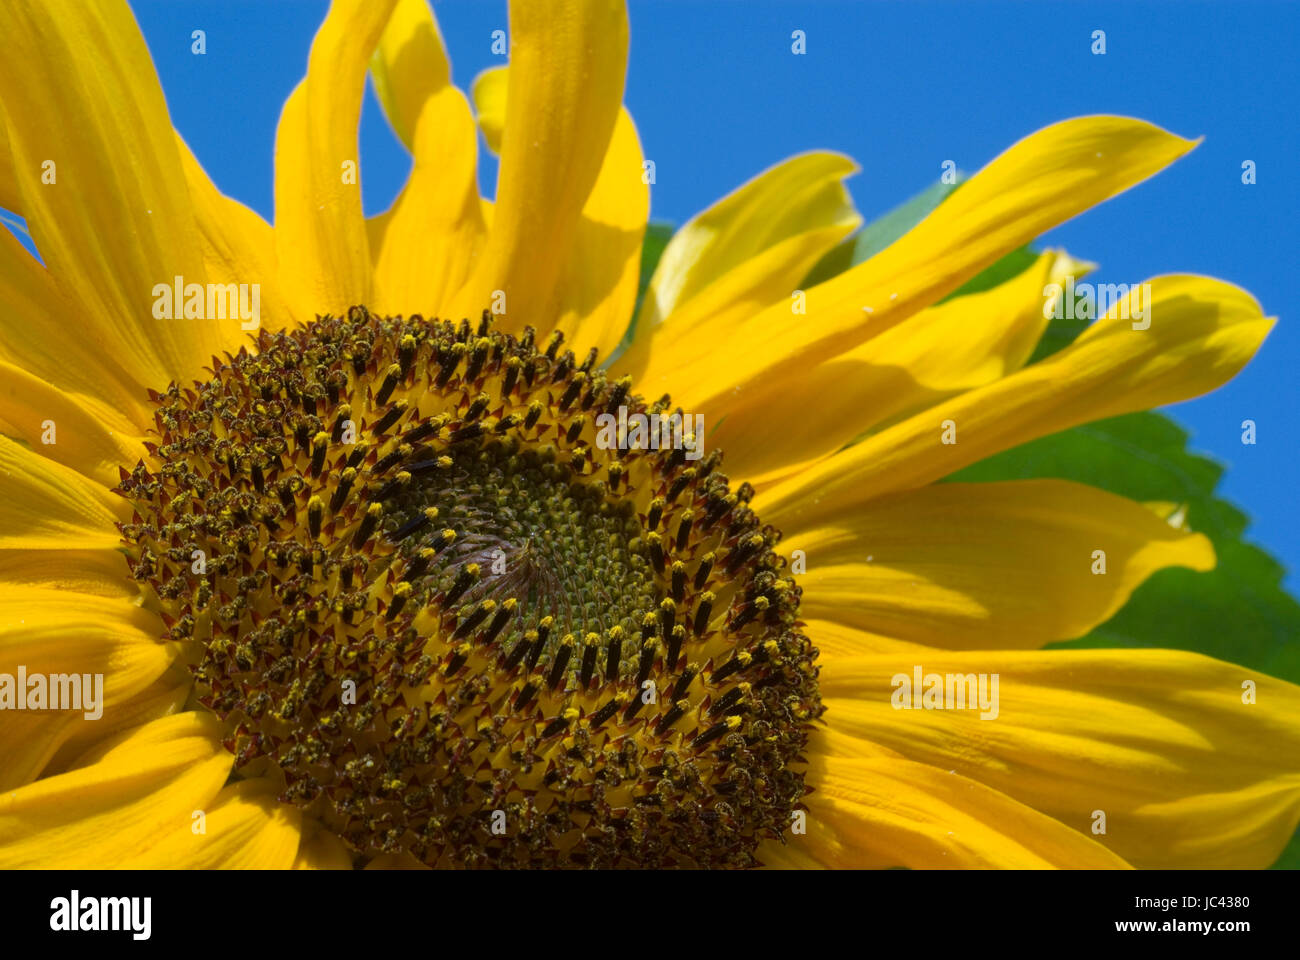 Sunflower against blue sky Stock Photo